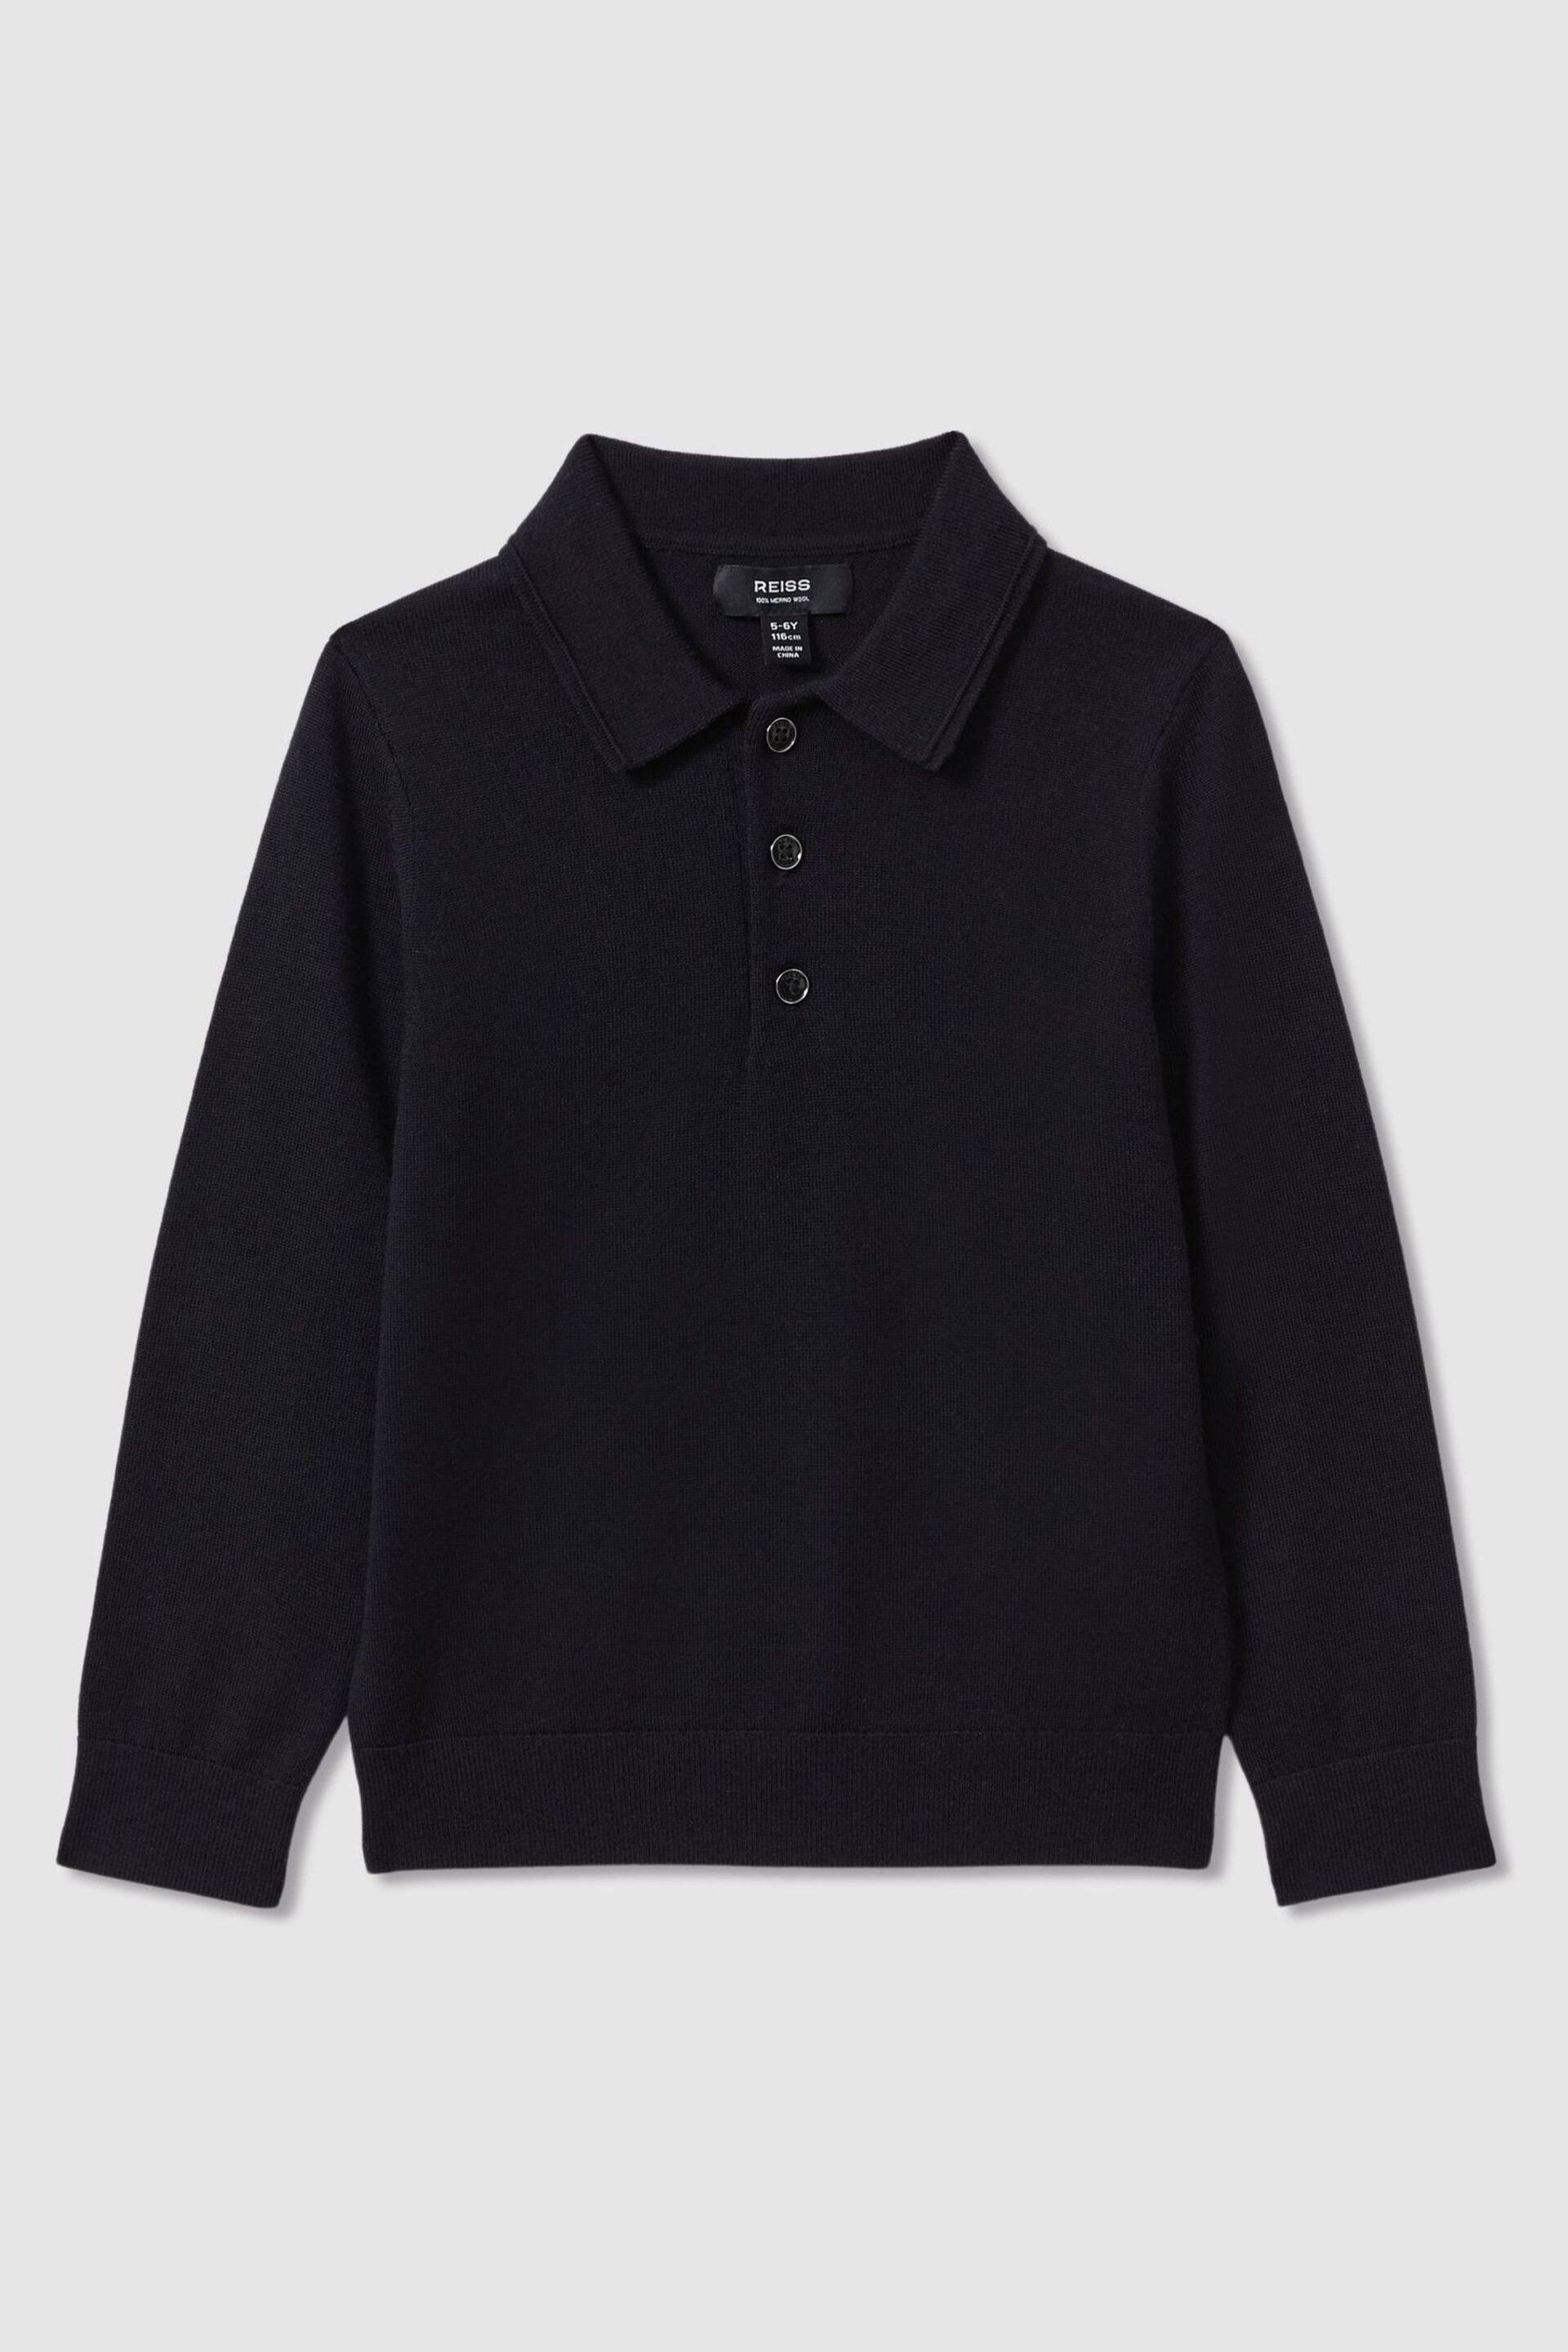 Reiss Navy Trafford Teen Merino Wool Polo Shirt - Image 1 of 3